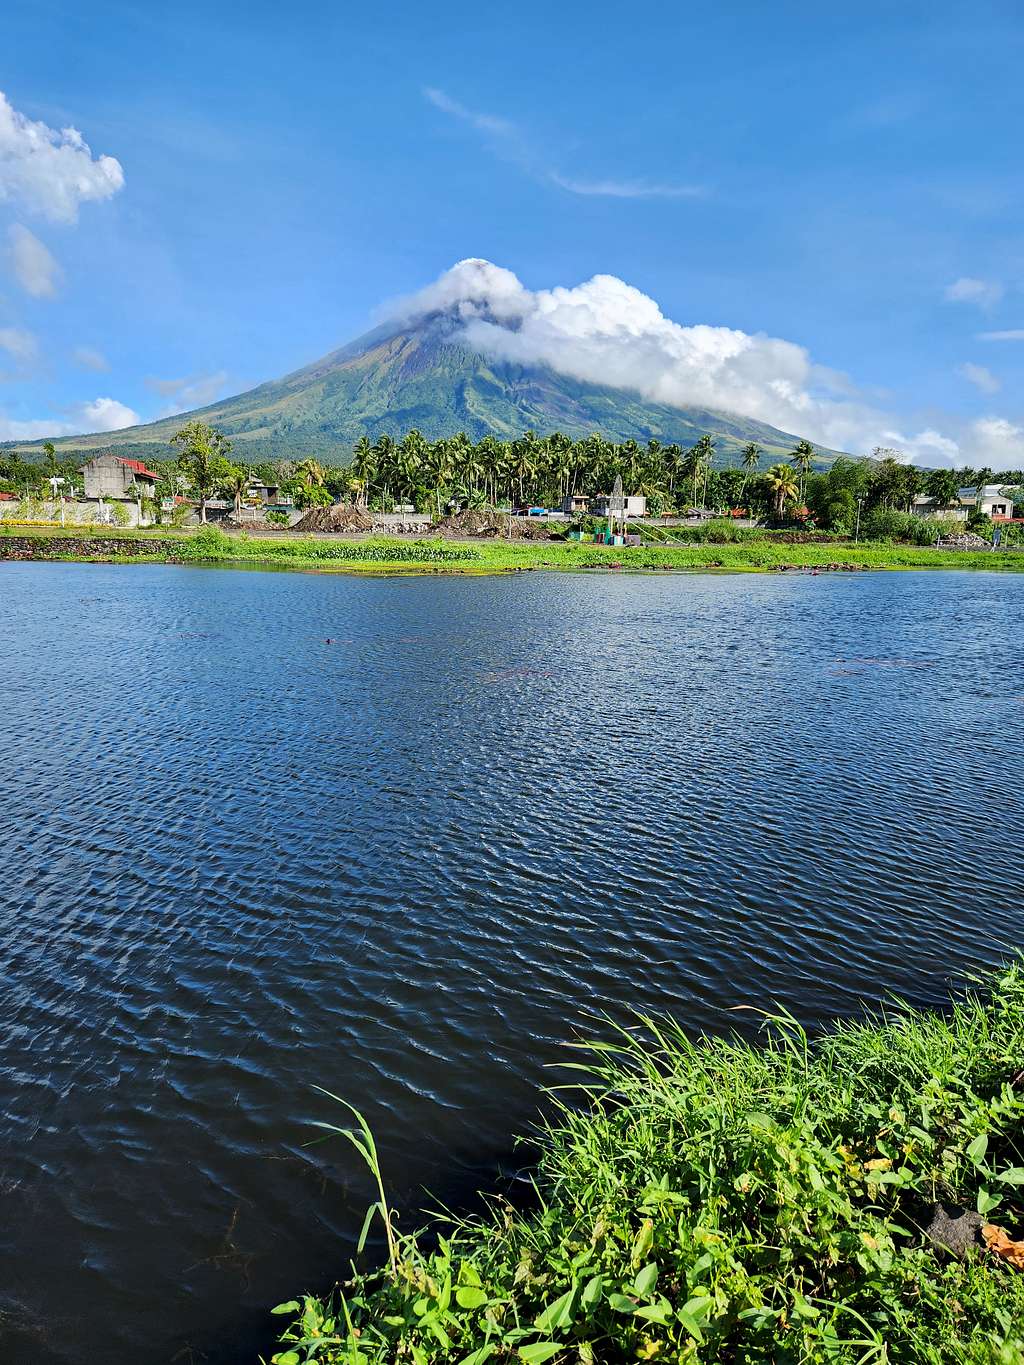 Samlung Lake and Mayon Volcano